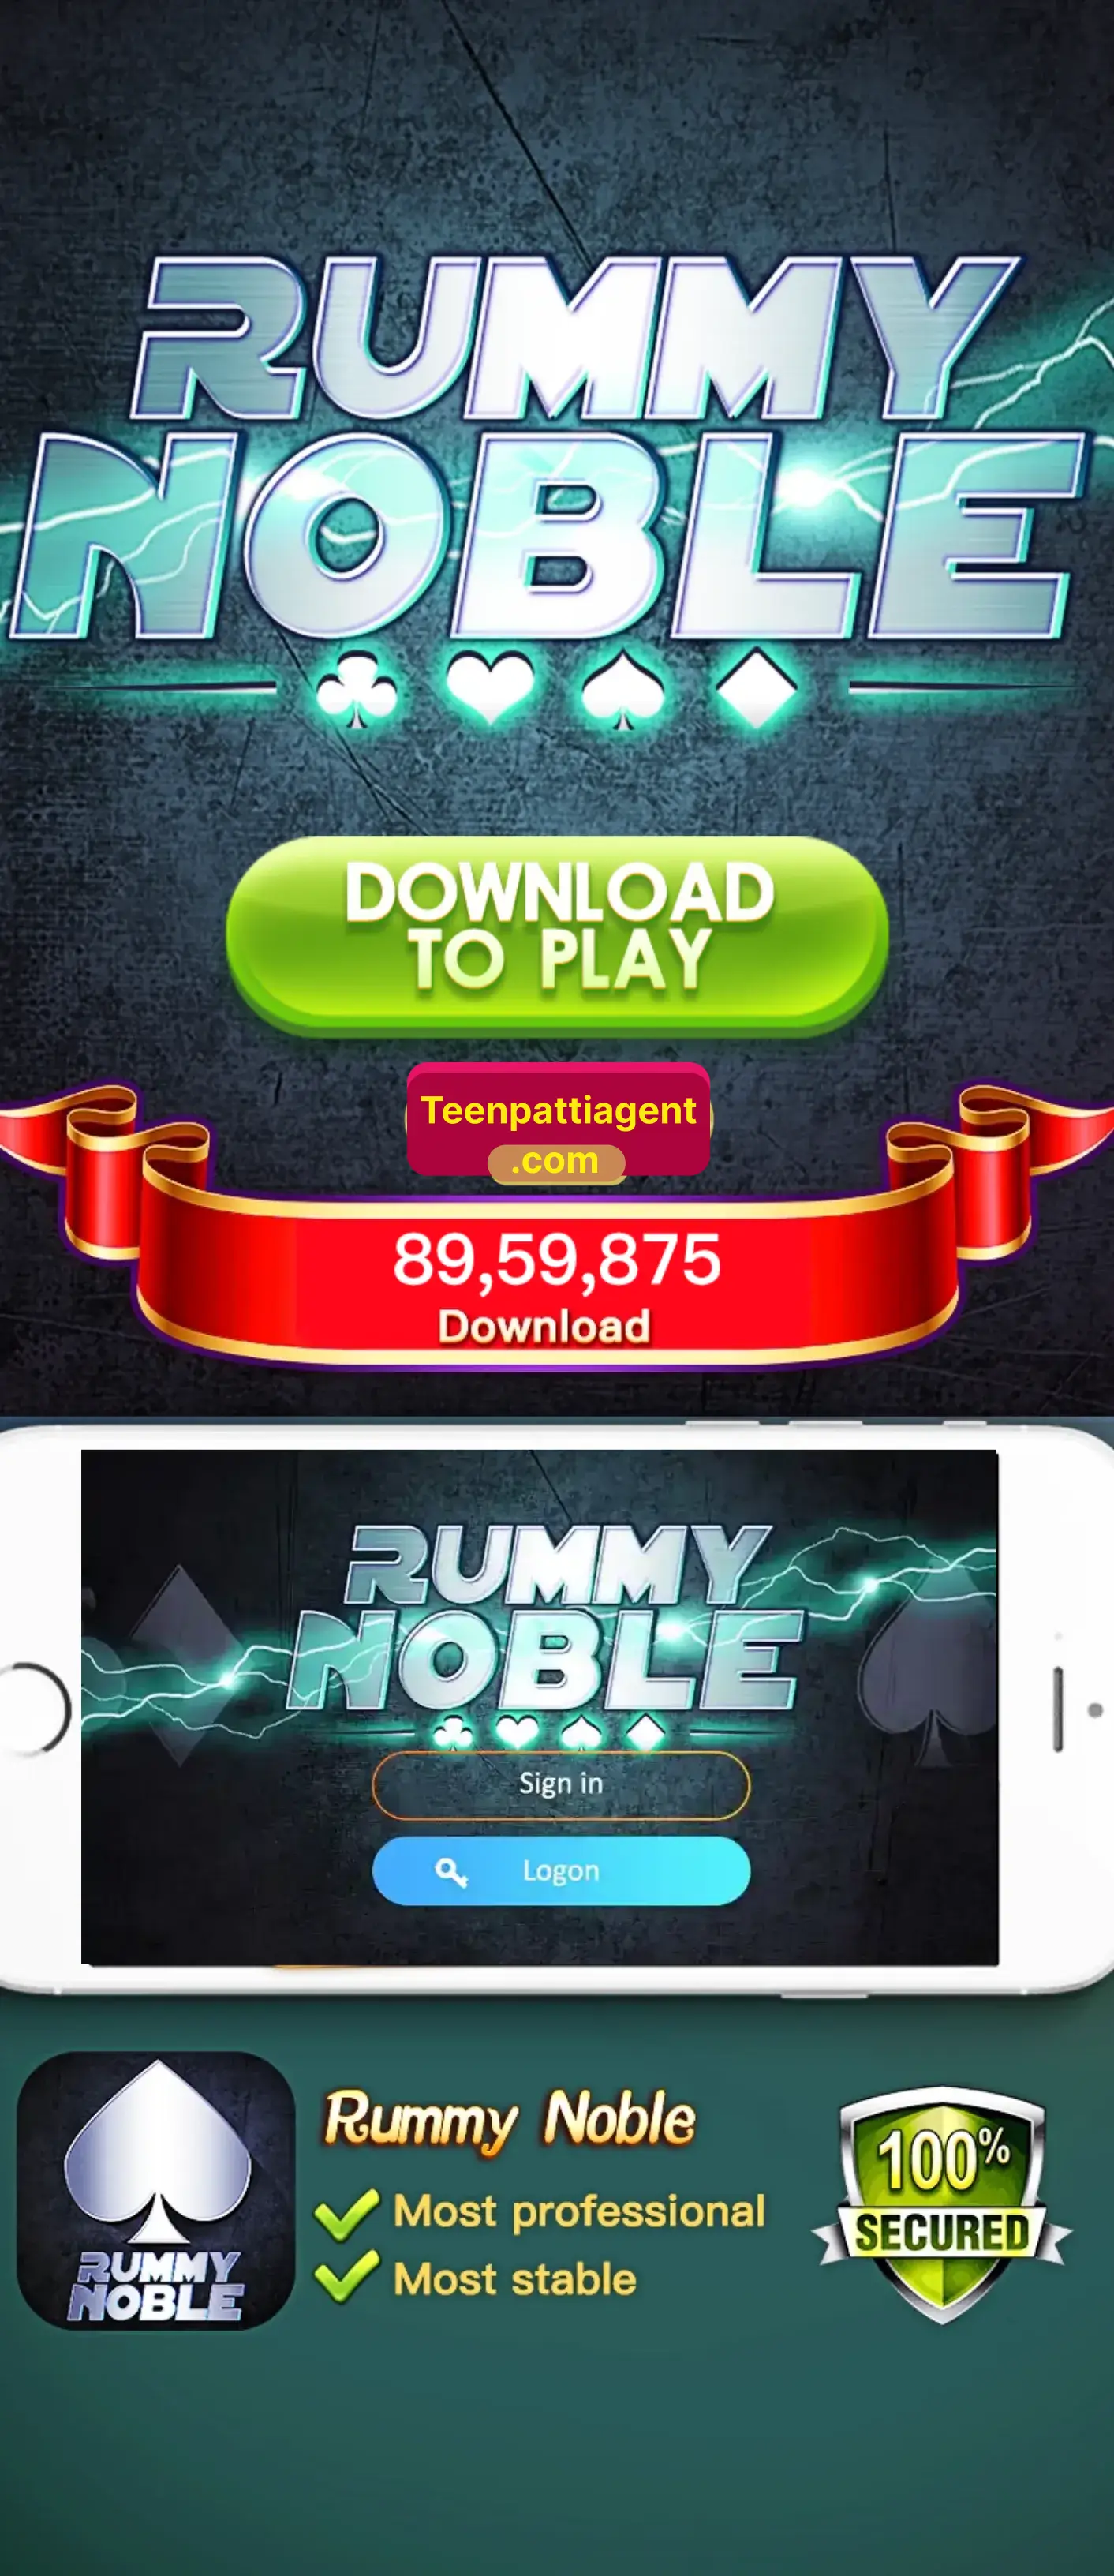 New Rummy Noble App Top Rummy App List